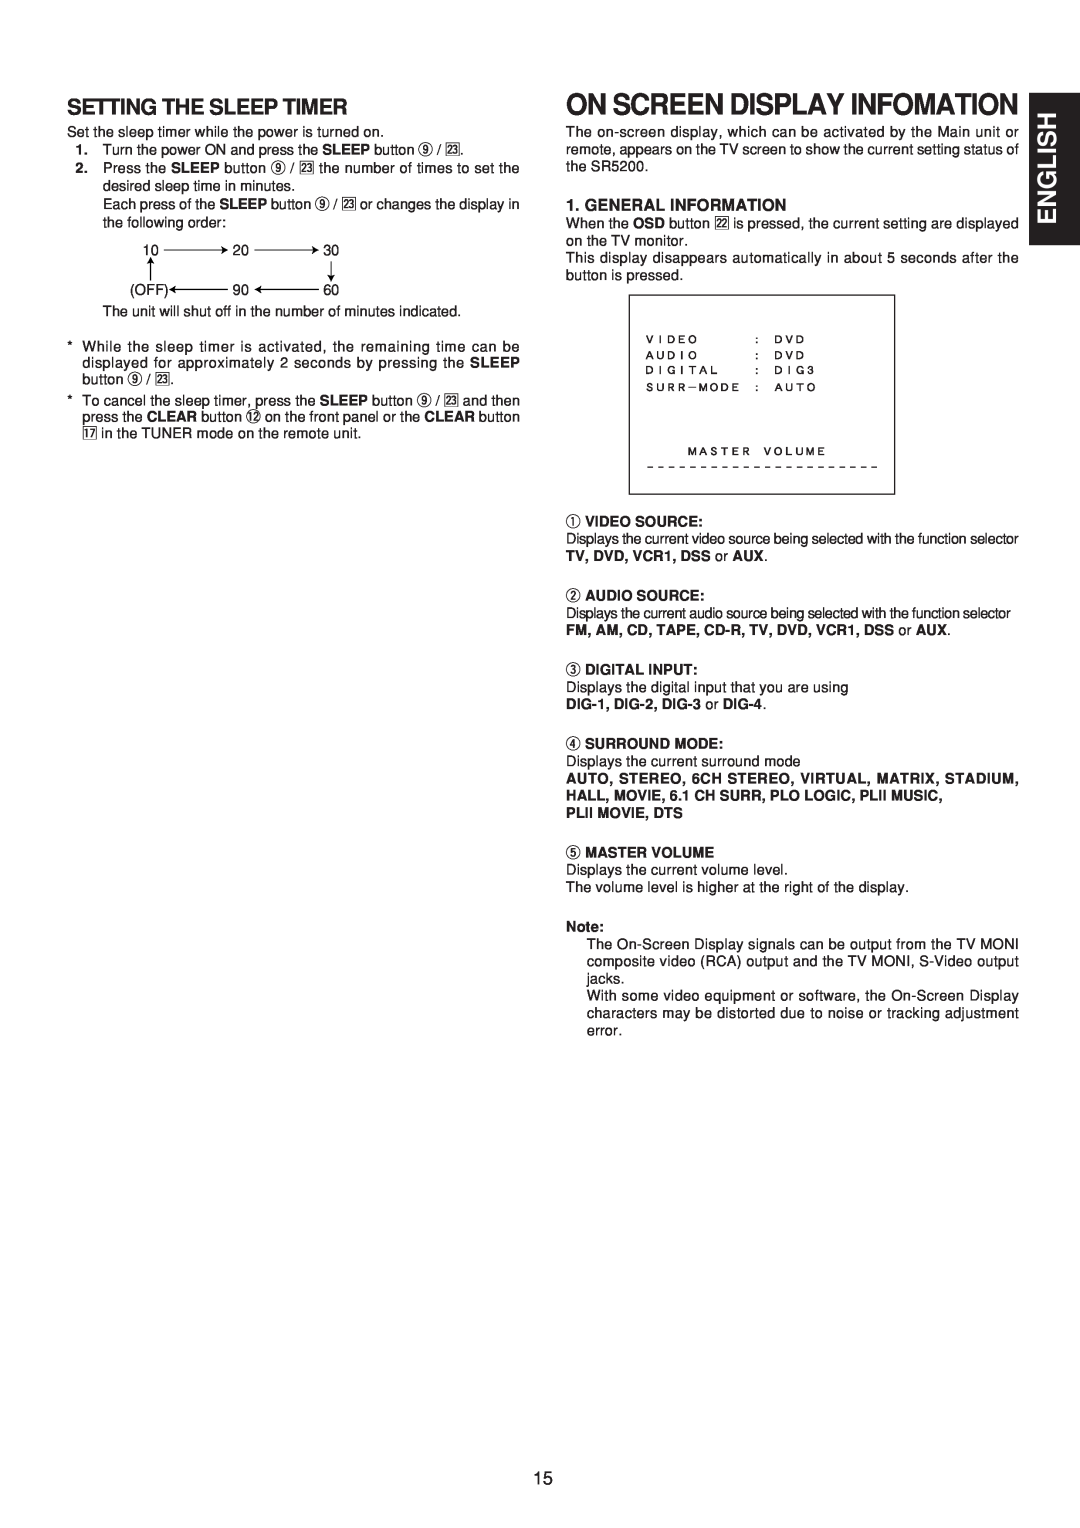 Marantz SR5200 manual On Screen Display Infomation, English, General Information, qVIDEO SOURCE, eDIGITAL INPUT 